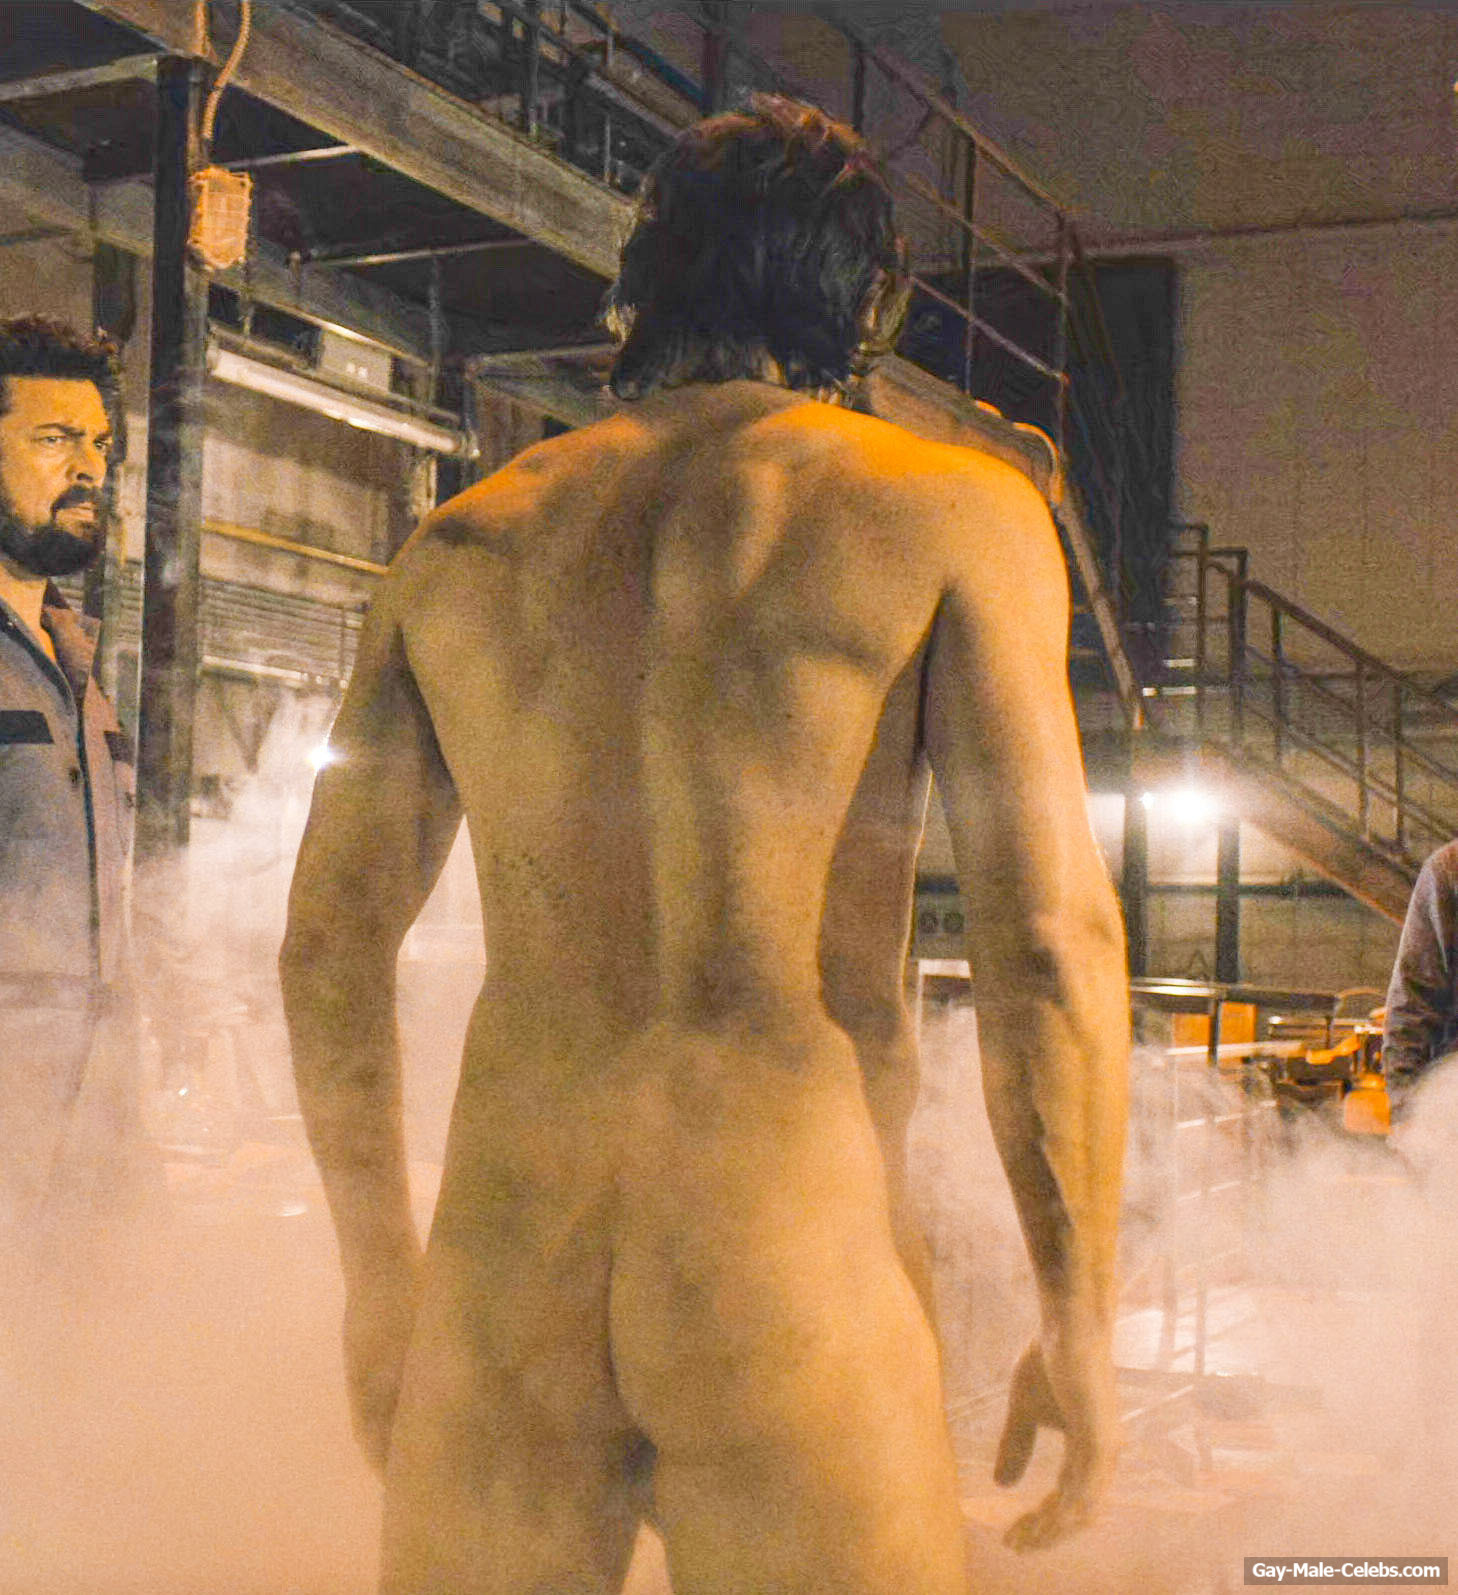 OMG, his butt: Supernatural's Jensen Ackles in 'THE BOYS' - OMG.BLOG